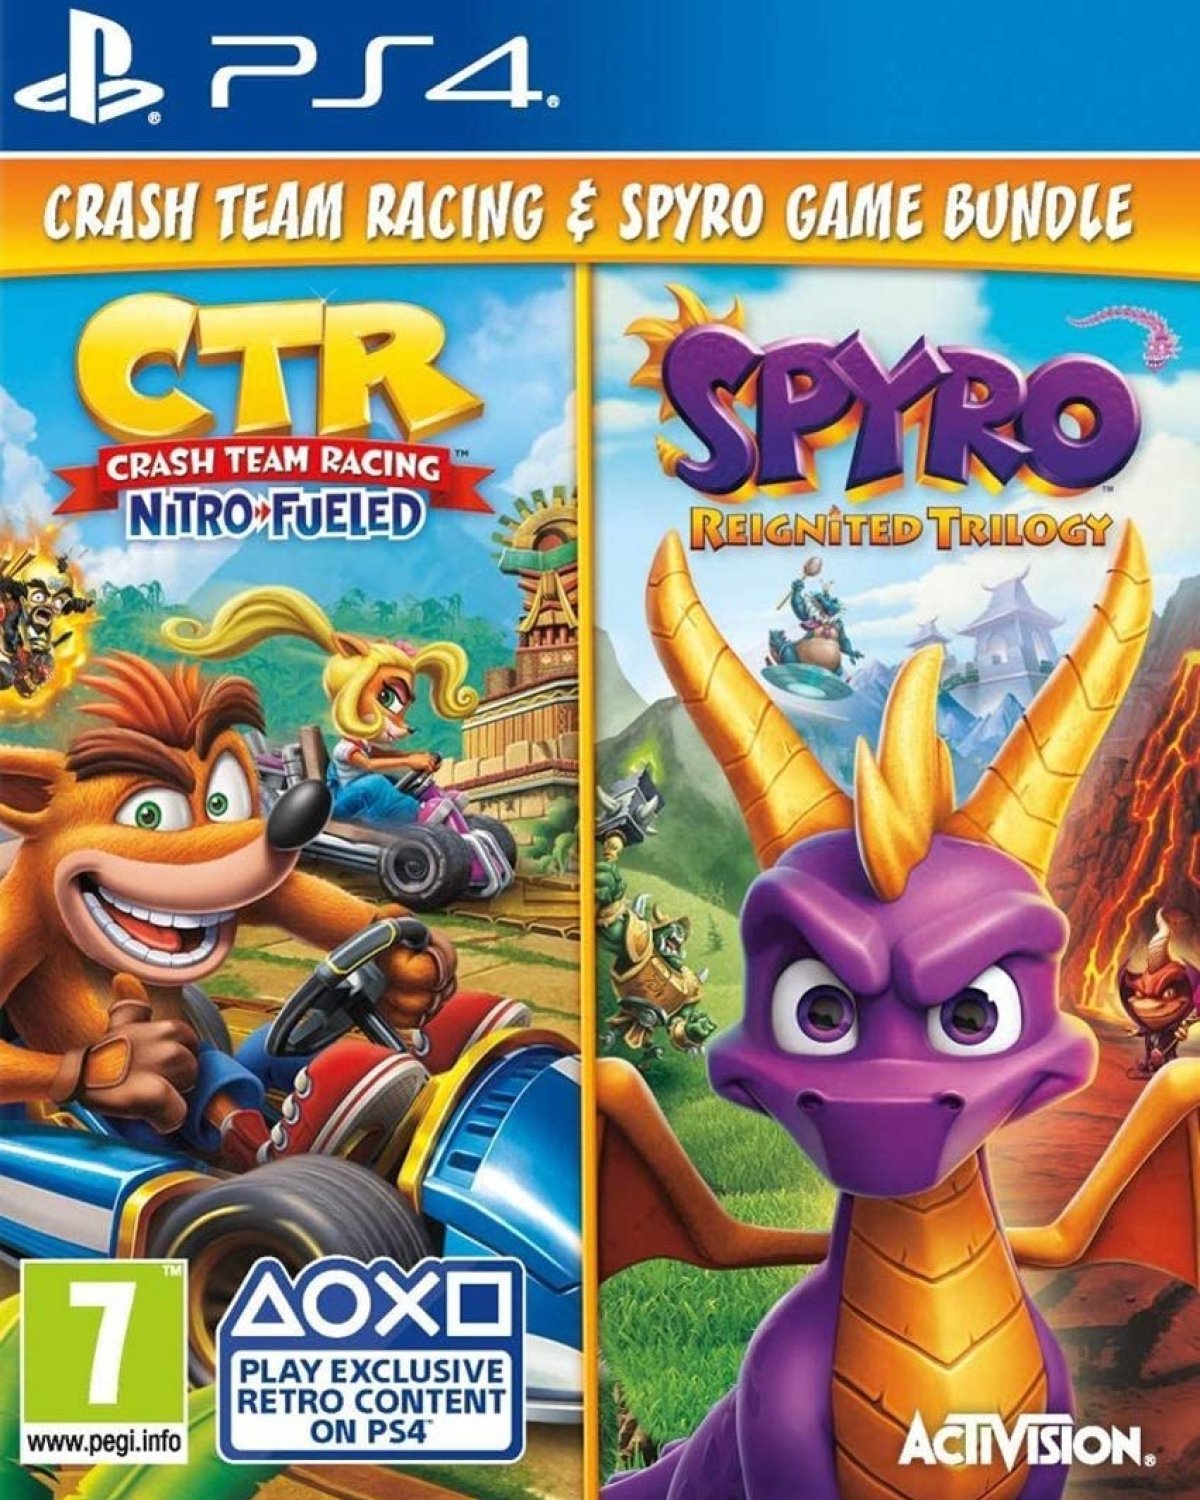 Crash ctr + Spyro™ Game Bundle